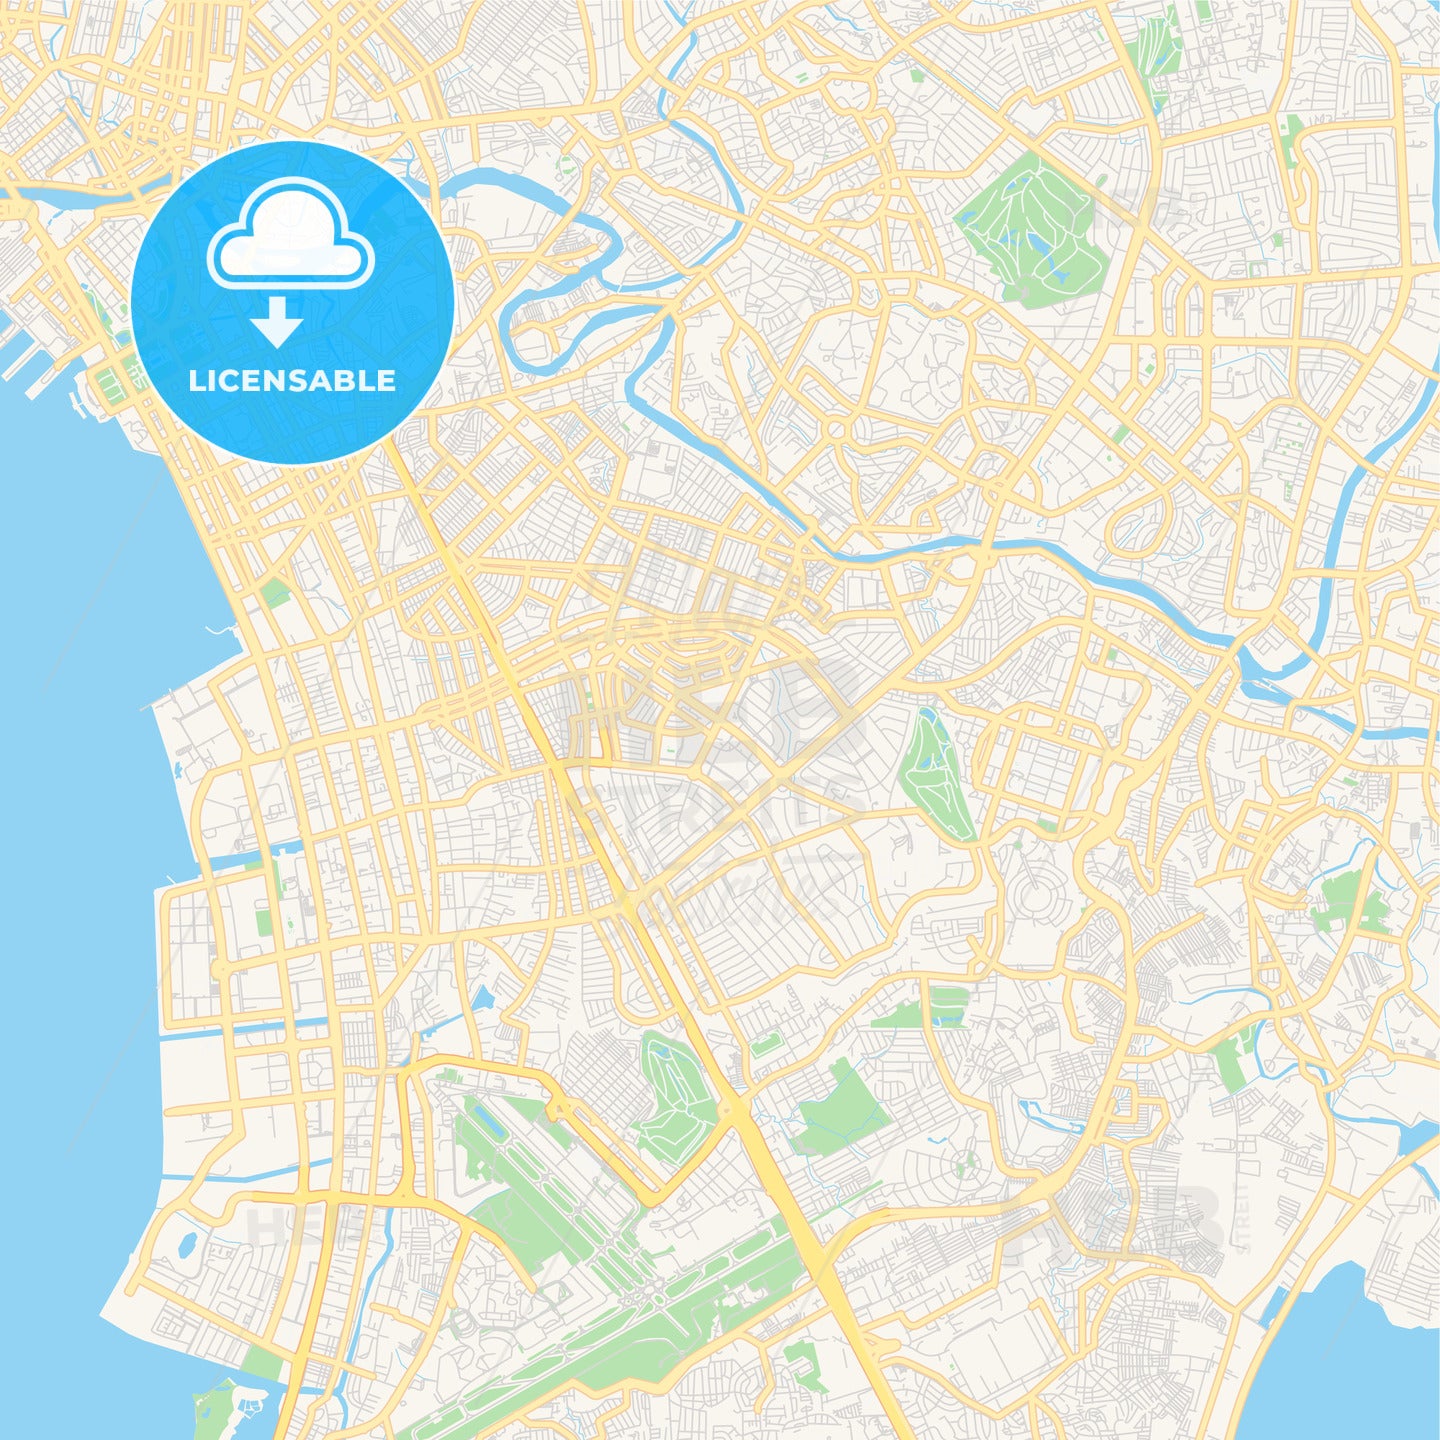 Printable street map of Makati, Philippines